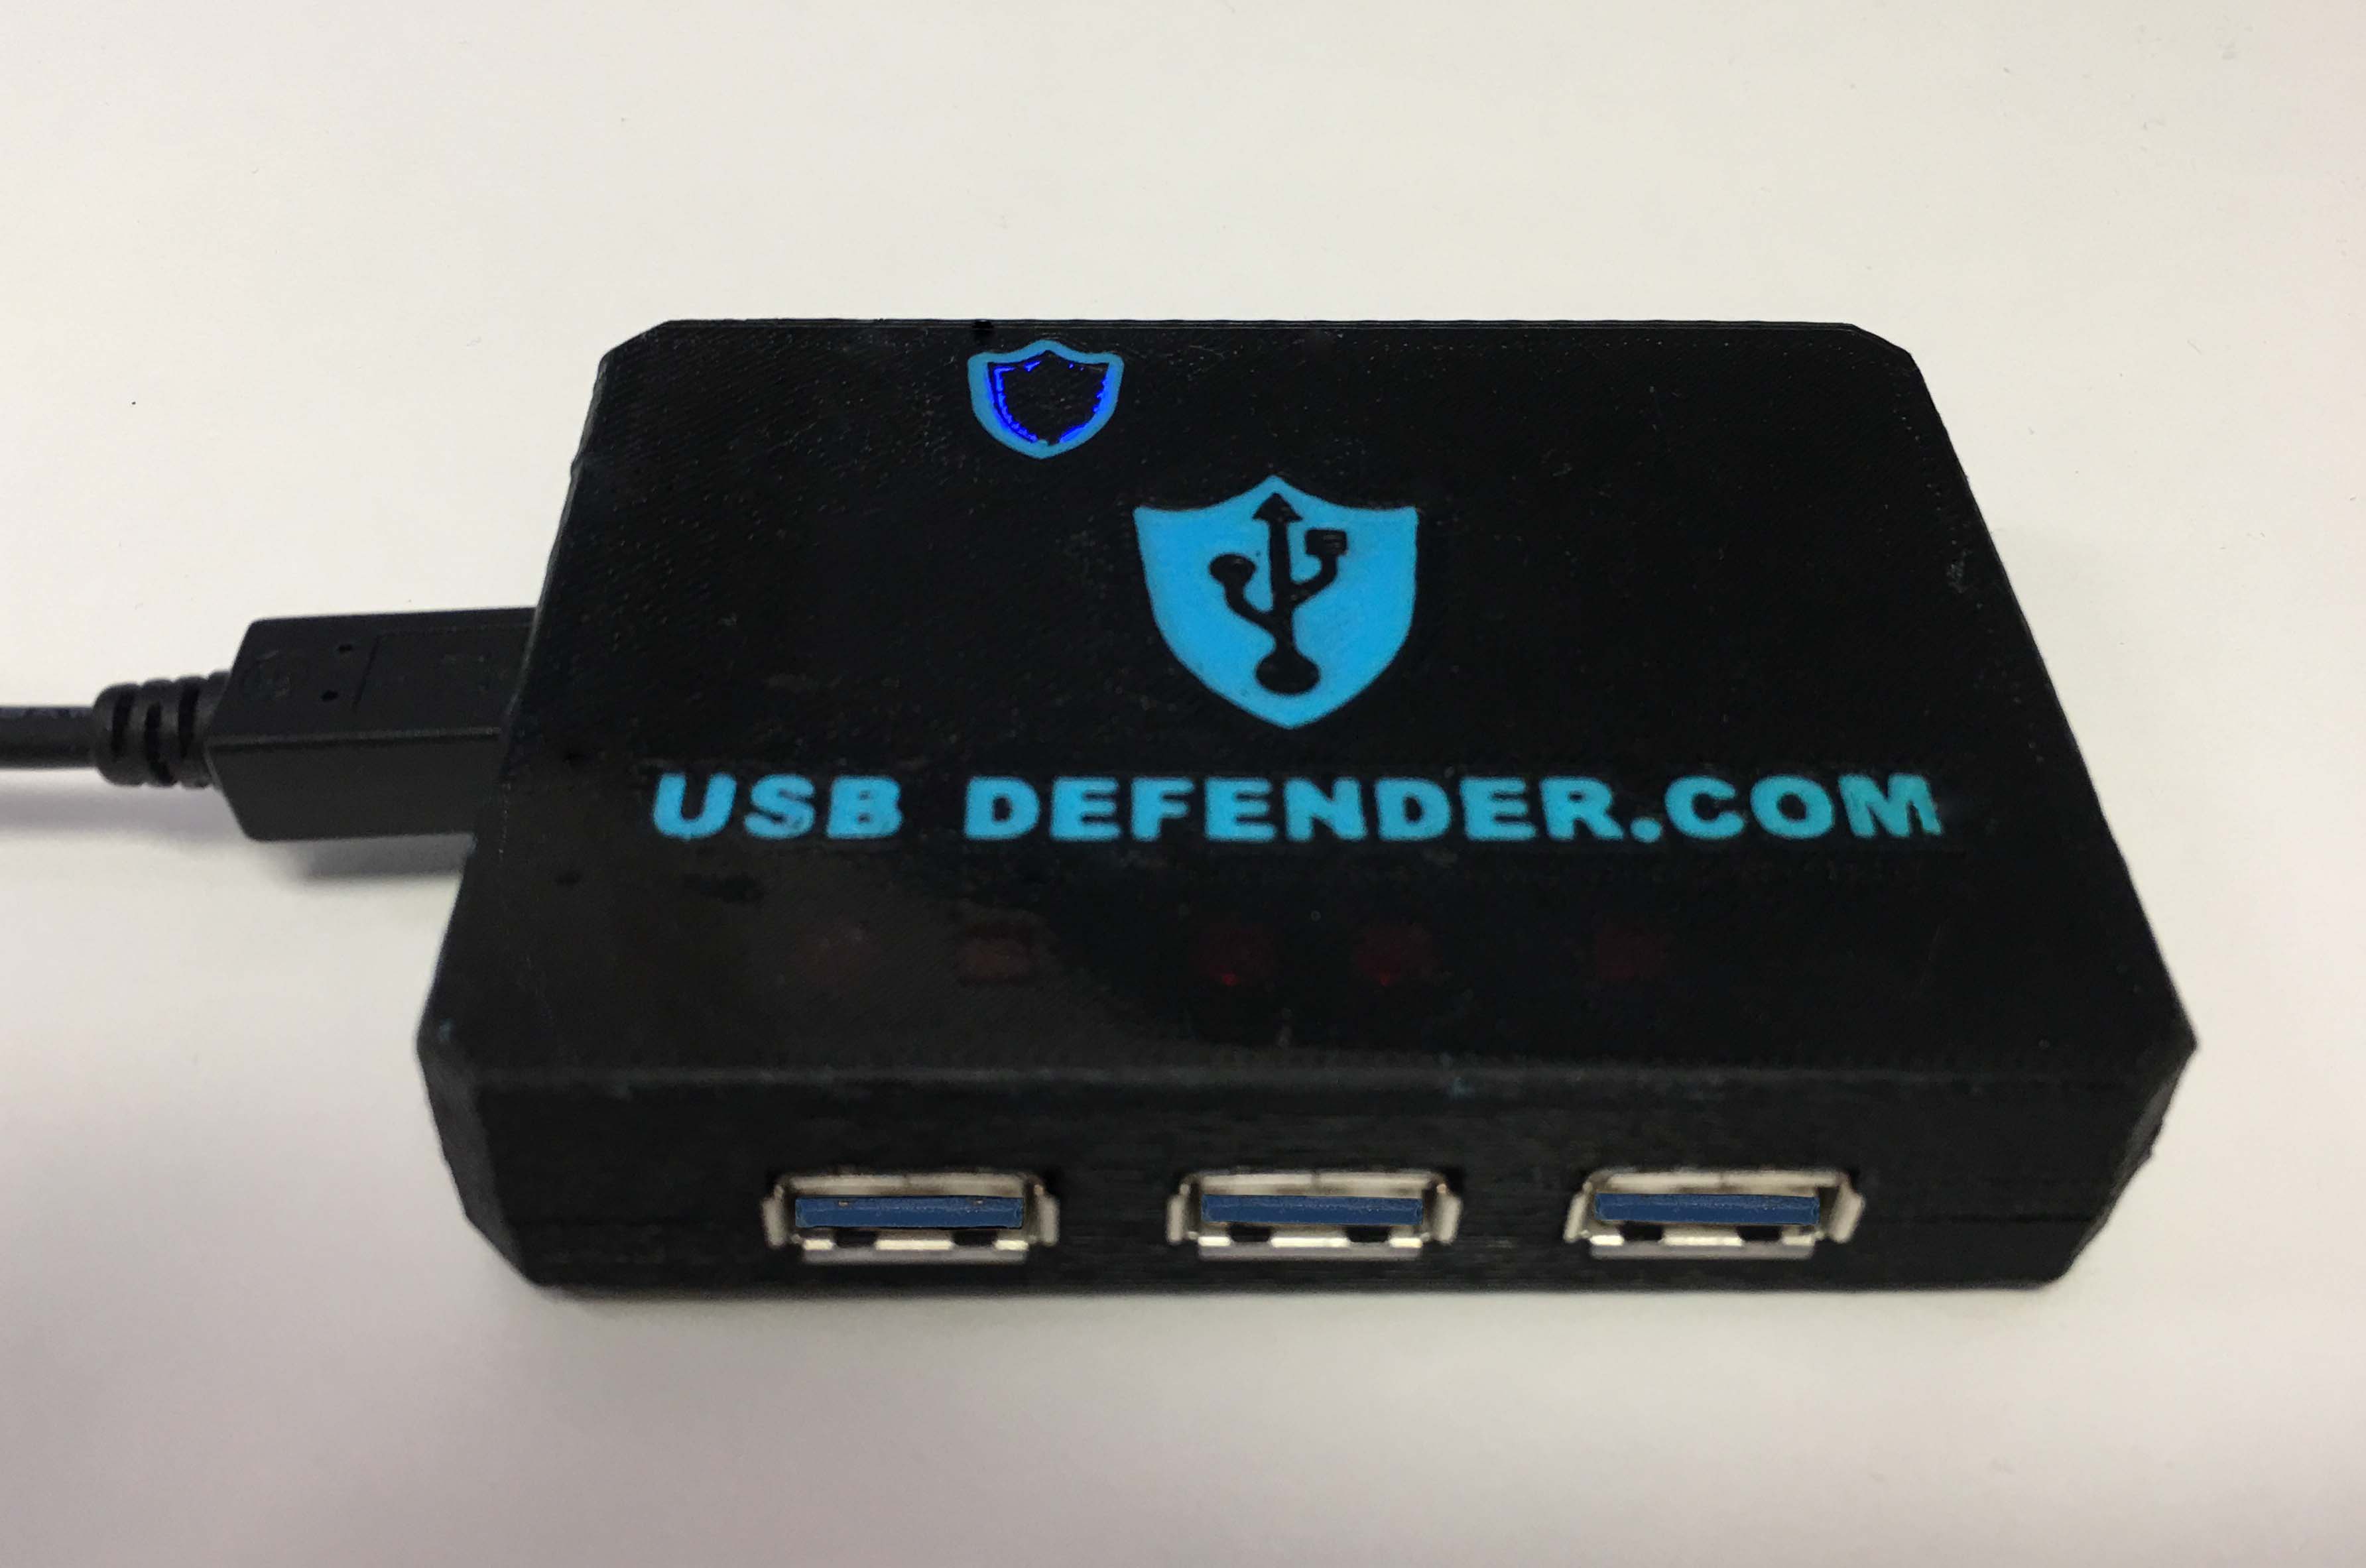 Defender com. Defender флешка. Юсби защитник. USB Hub Defender. USB com Defender.